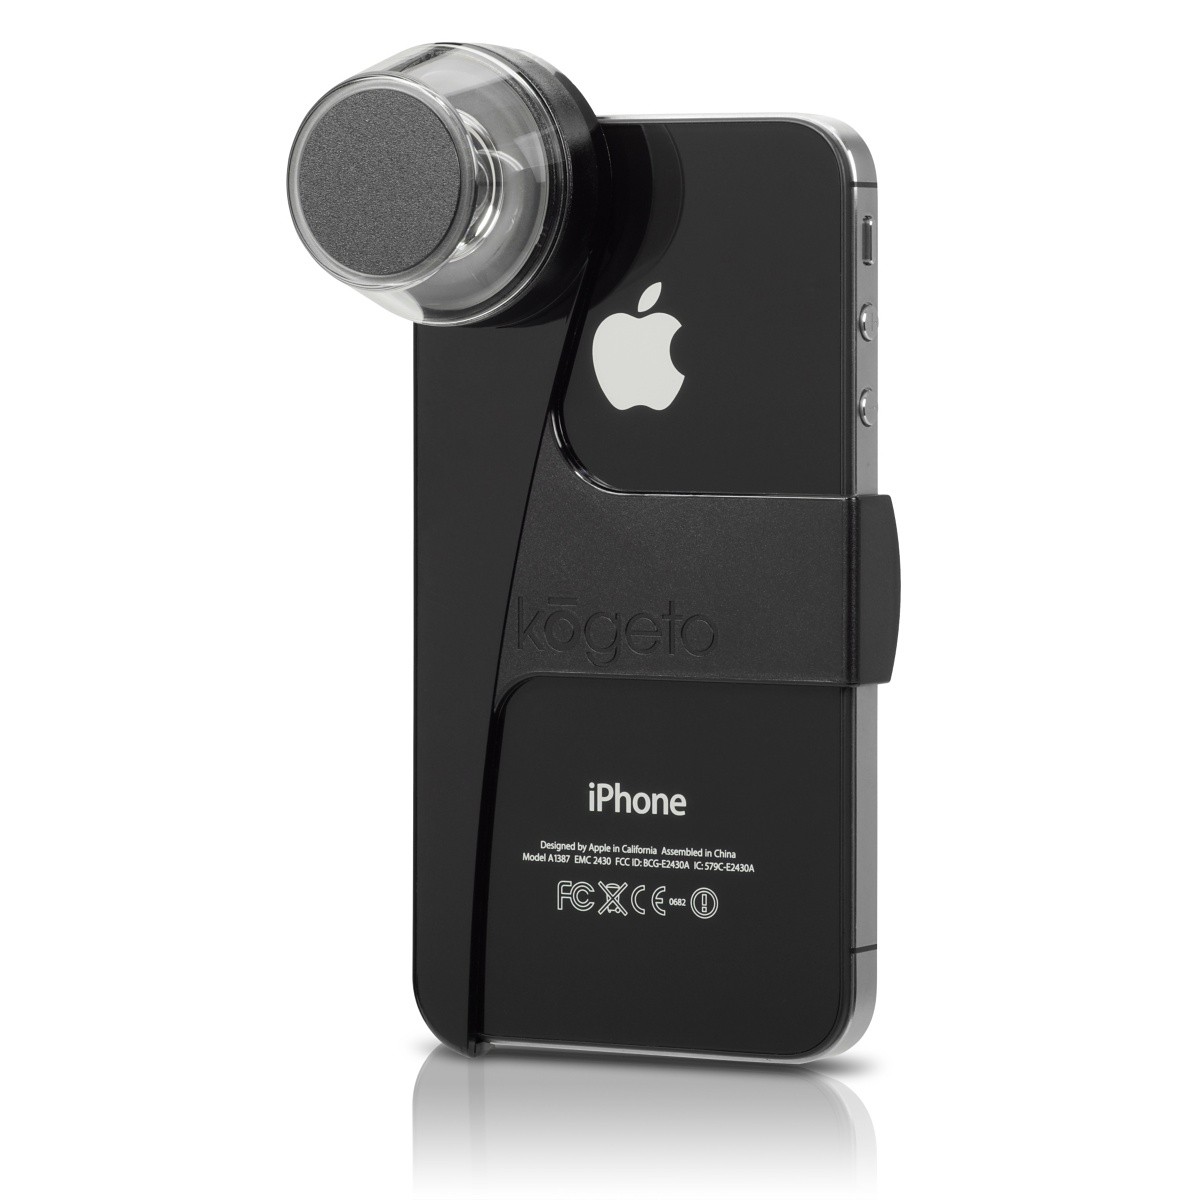 Kogeto Dot Panoramic Video Lens til iPhone 4 /4S - Sort